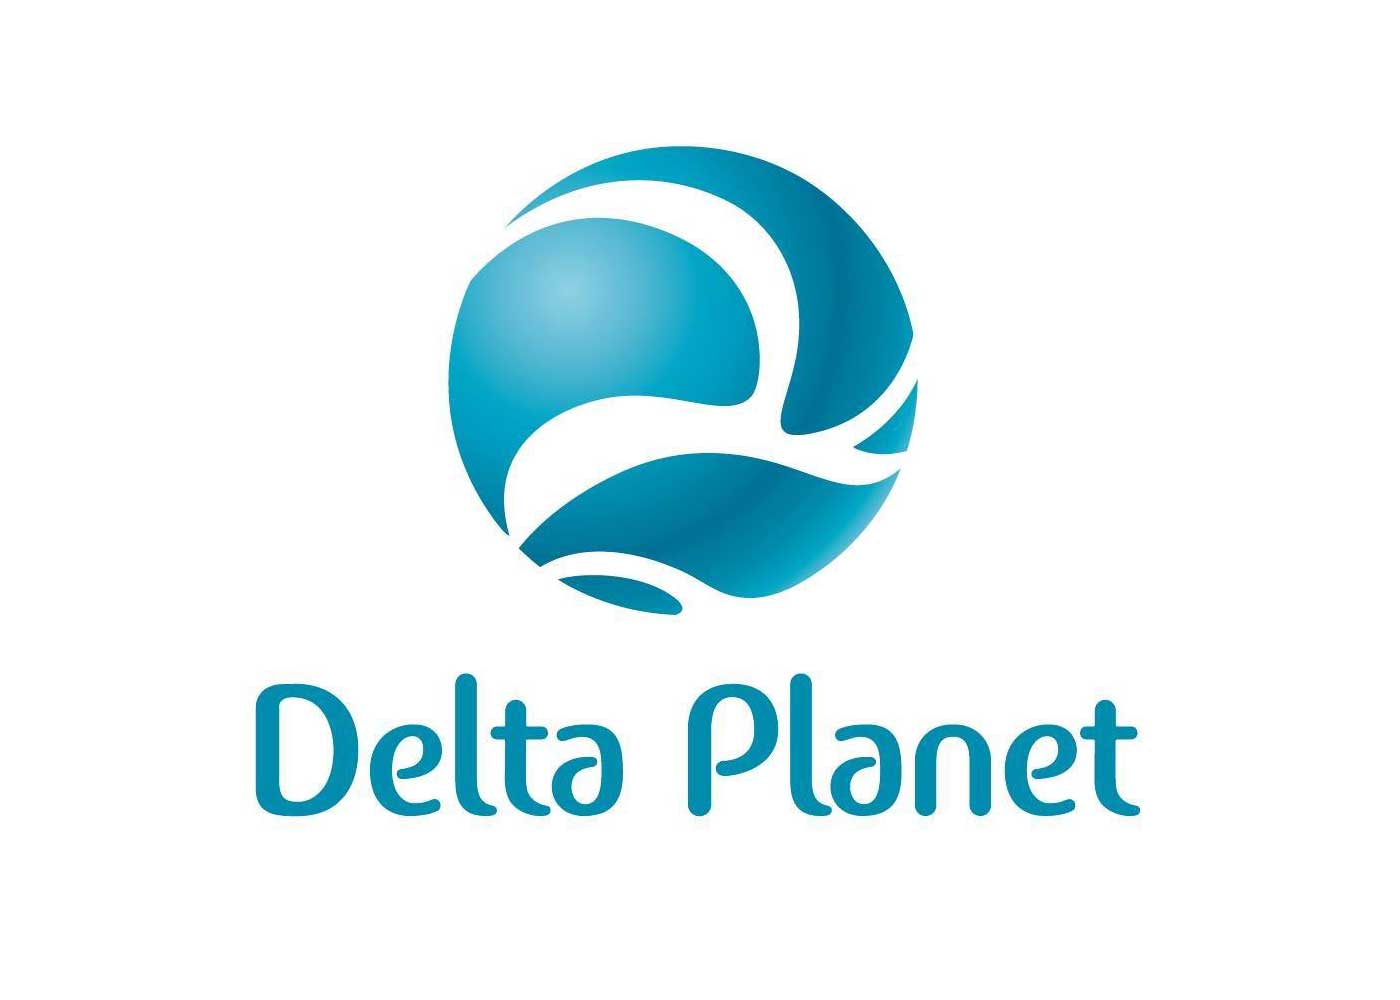 Delta planet